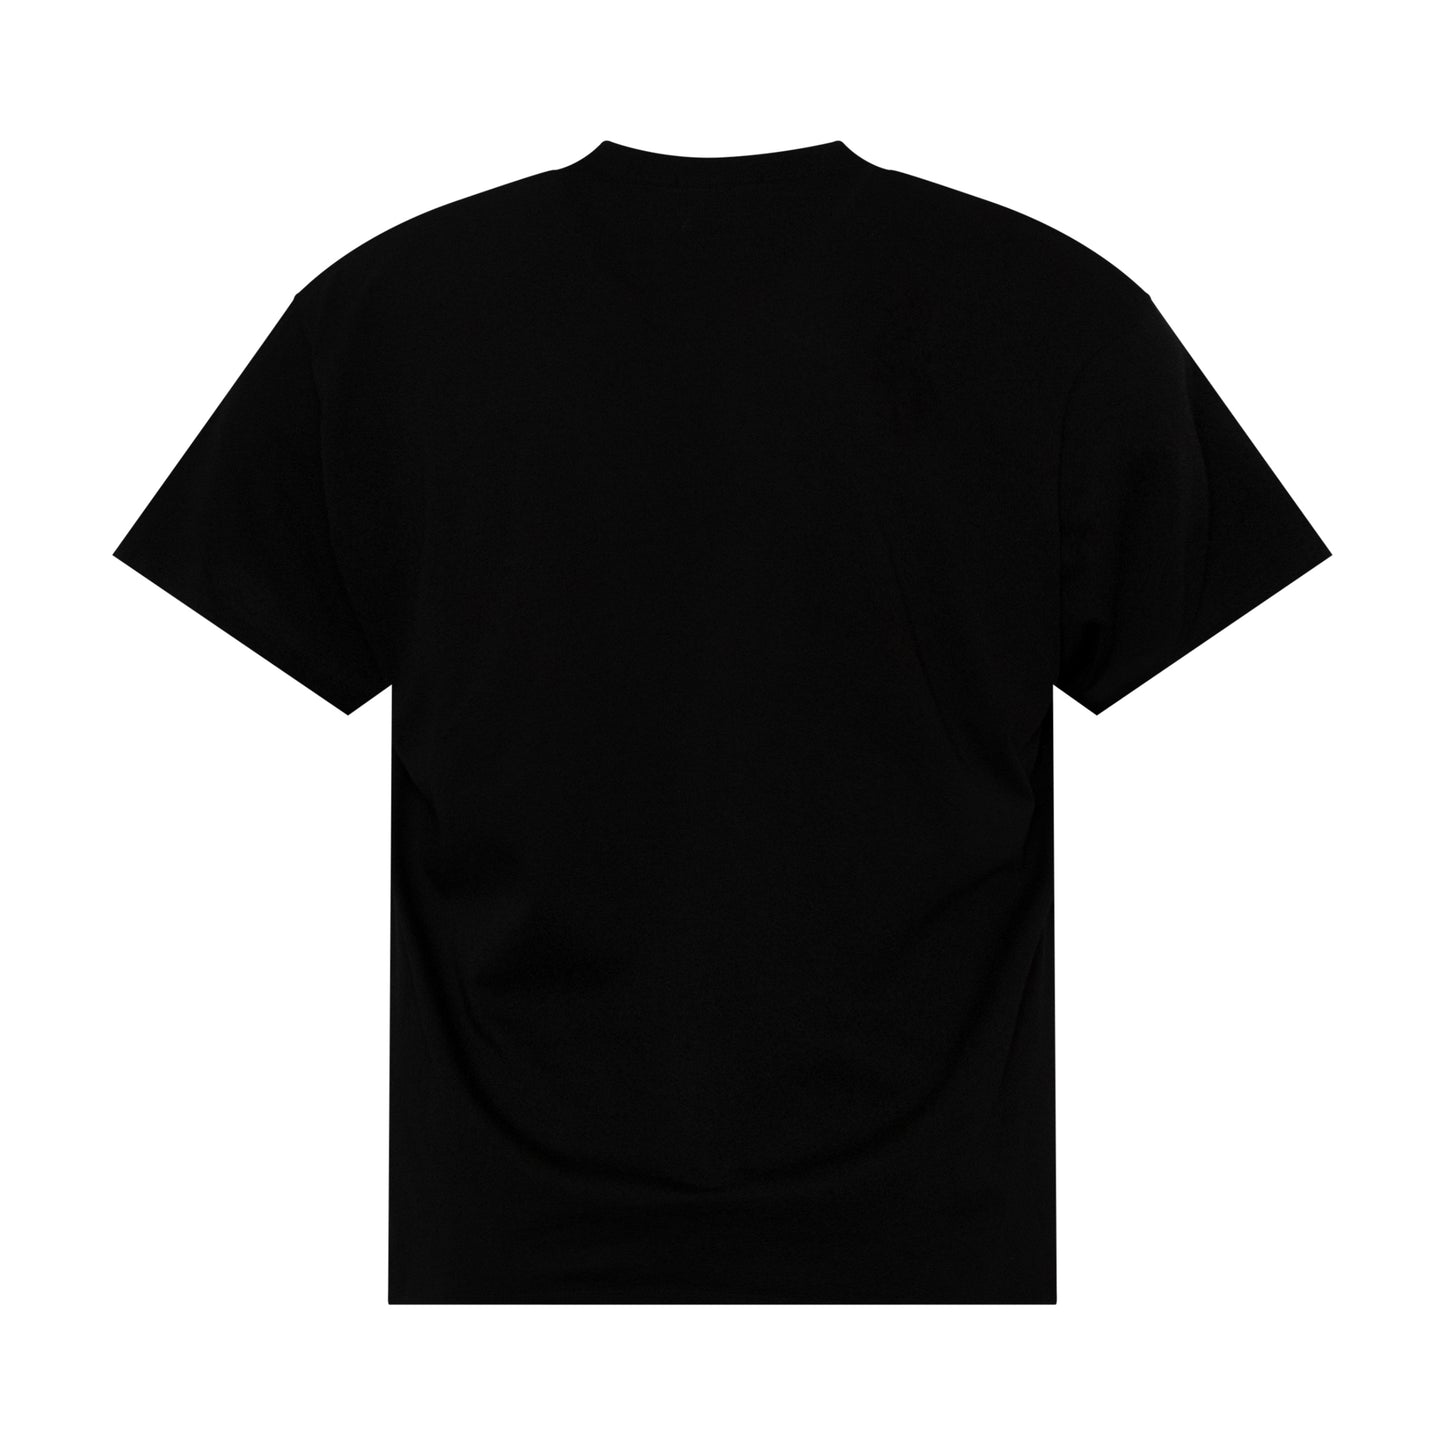 Dustin T-Shirt in Black